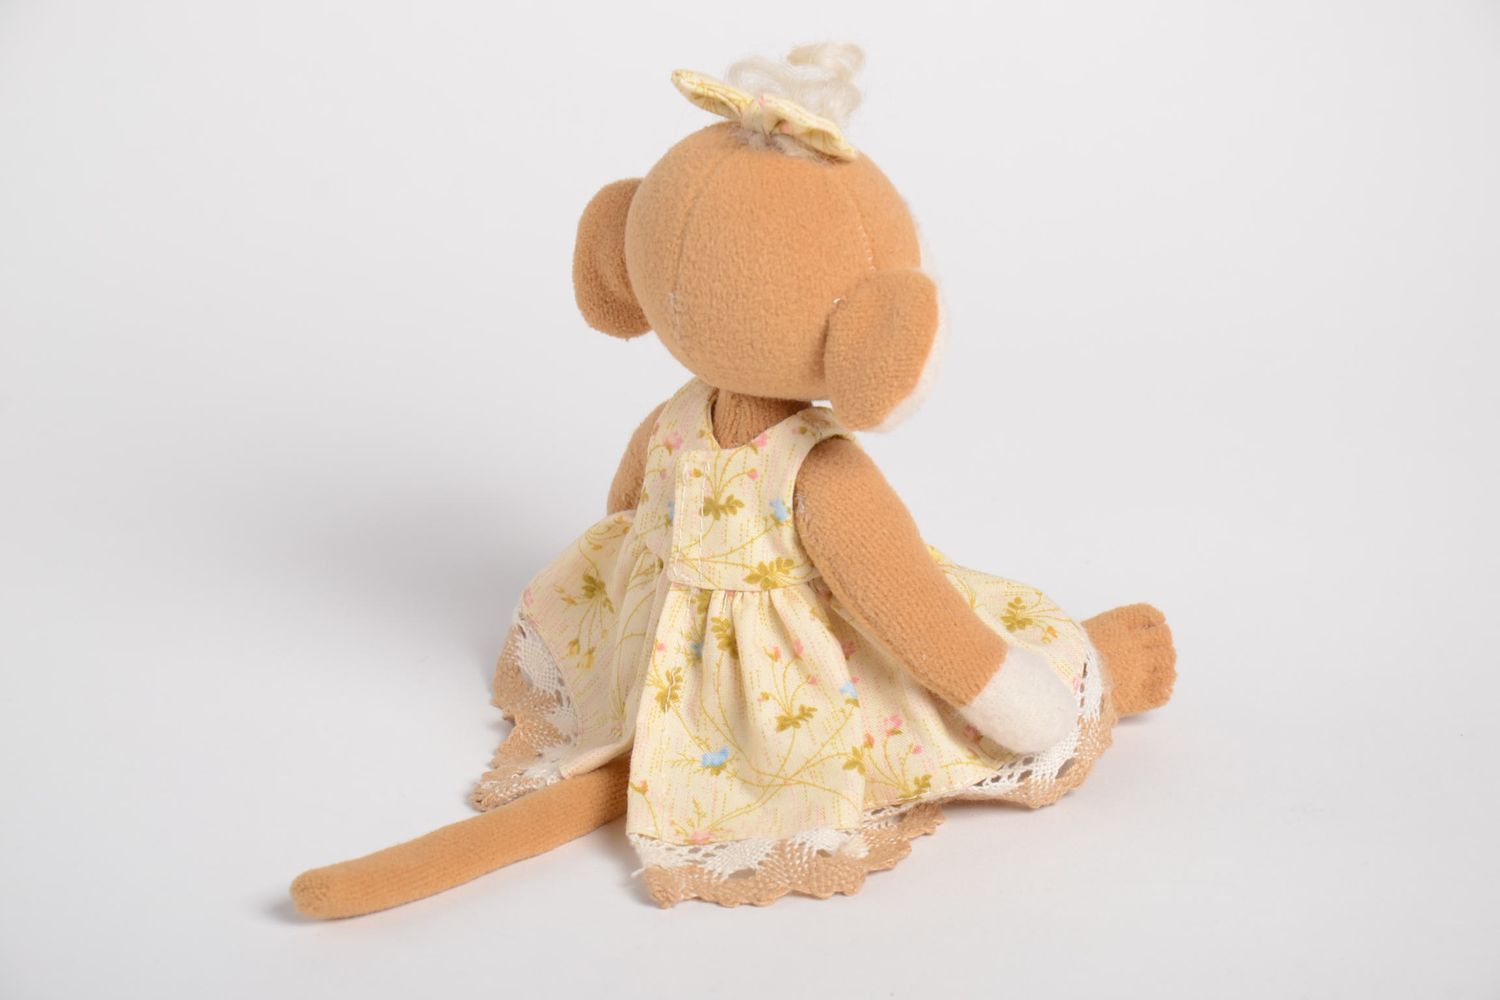 Handmade soft toy monkey stuffed toy for children interior decor ideas photo 3